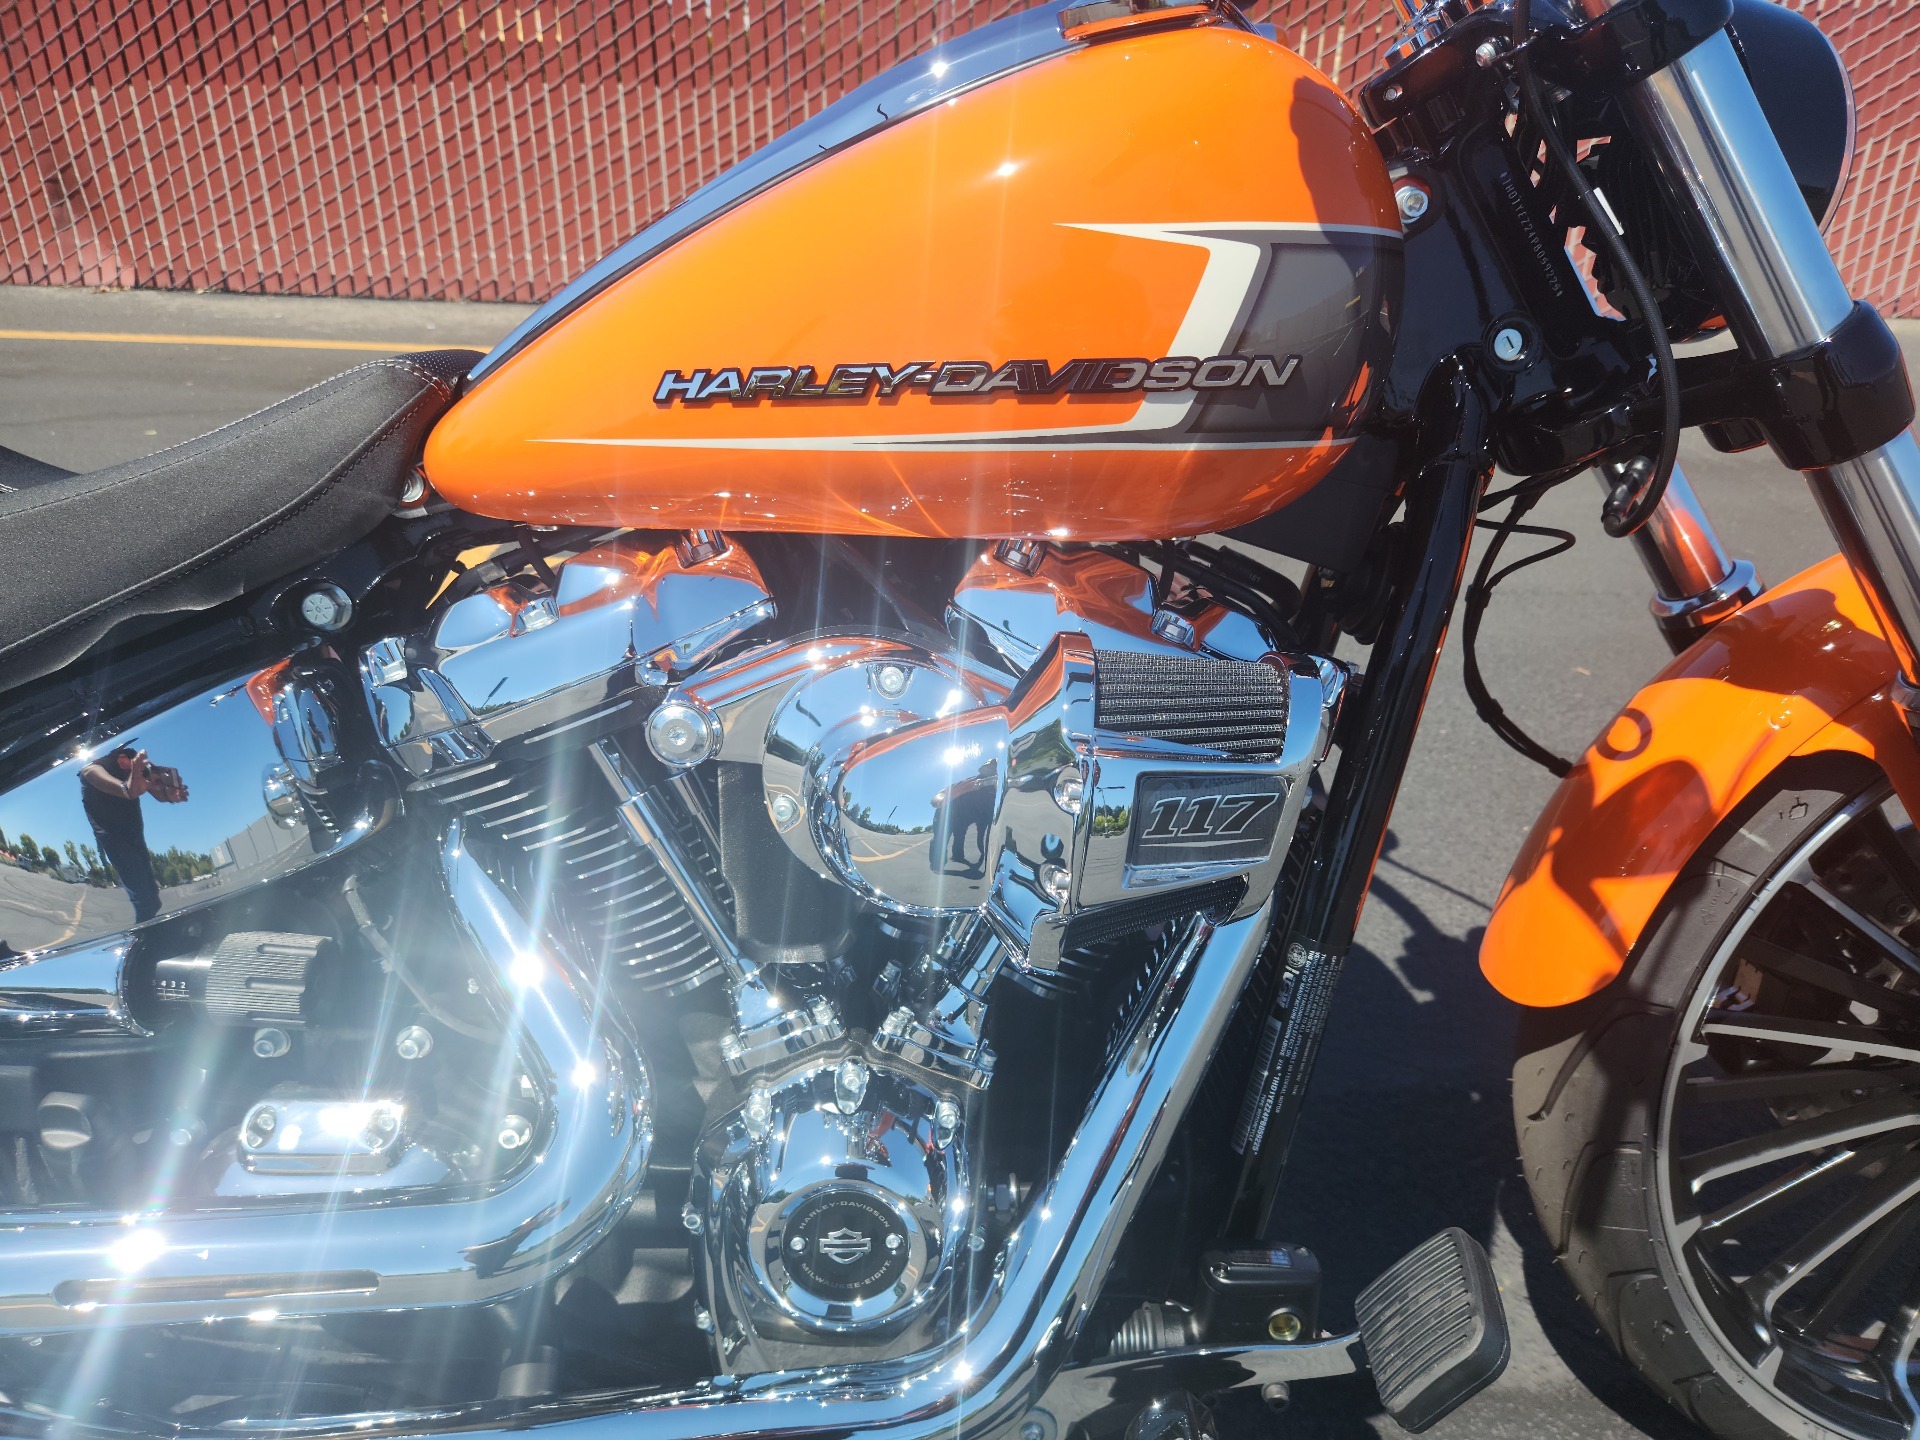 2023 Harley-Davidson Breakout® in San Jose, California - Photo 2